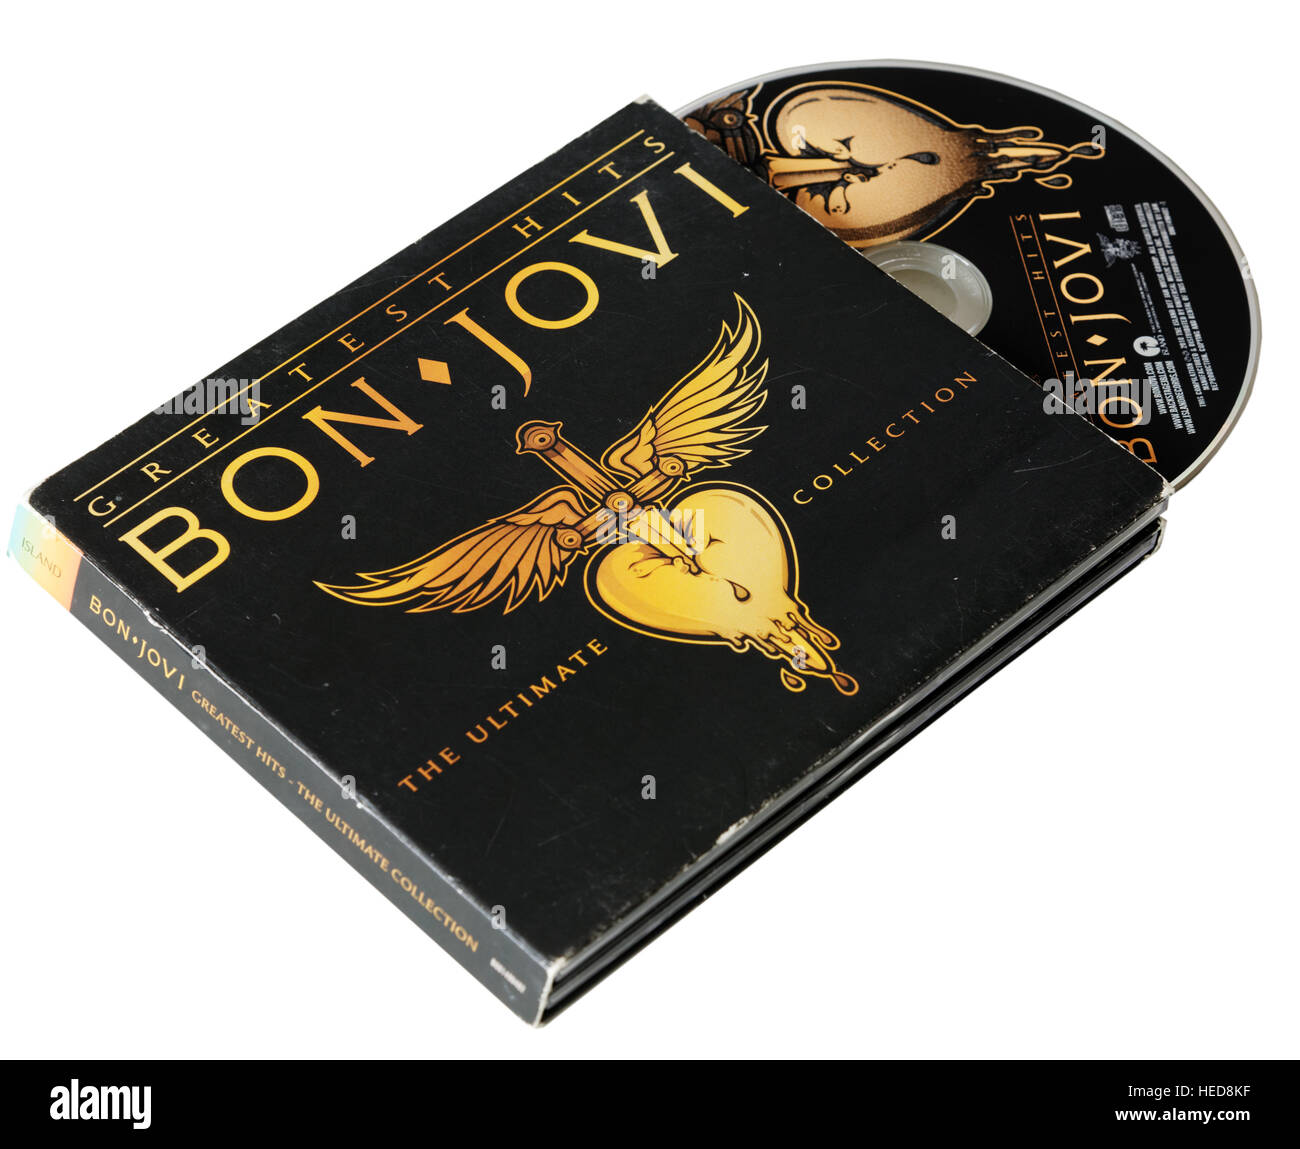 Bon Jovi Greatest Hits CD Stock Photo - Alamy